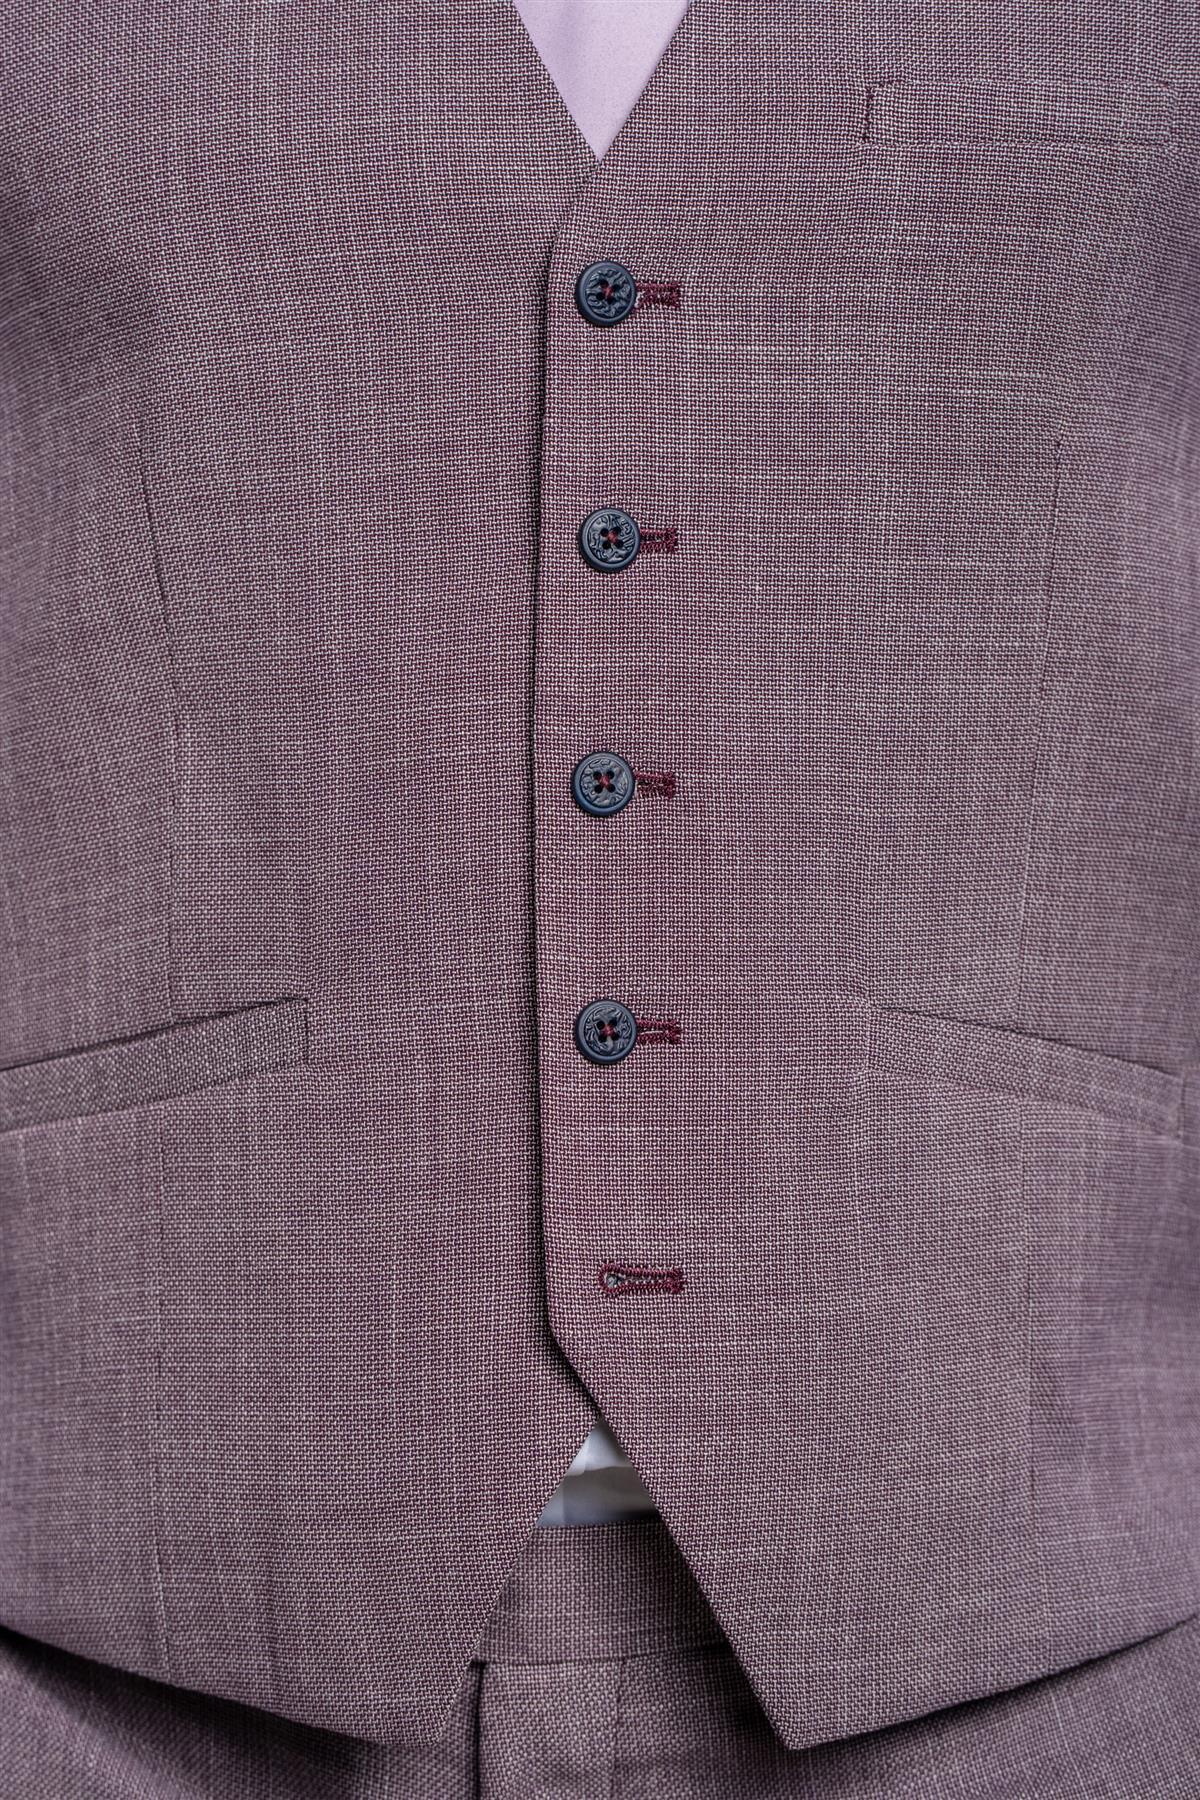 Miami lilac waistcoat front detail